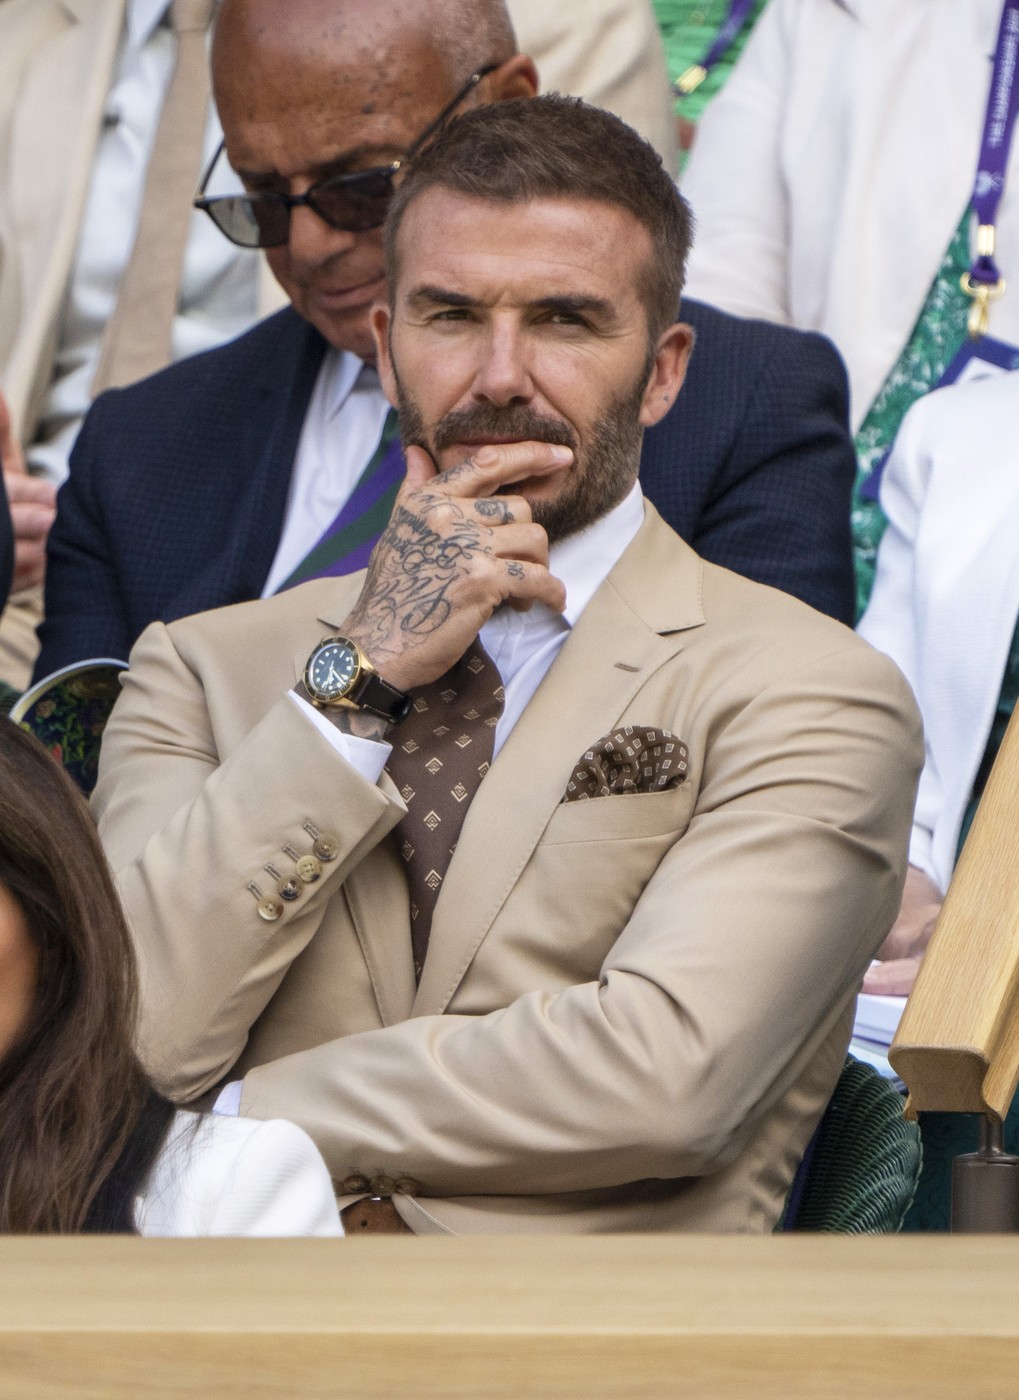 David Beckham / Profimedia